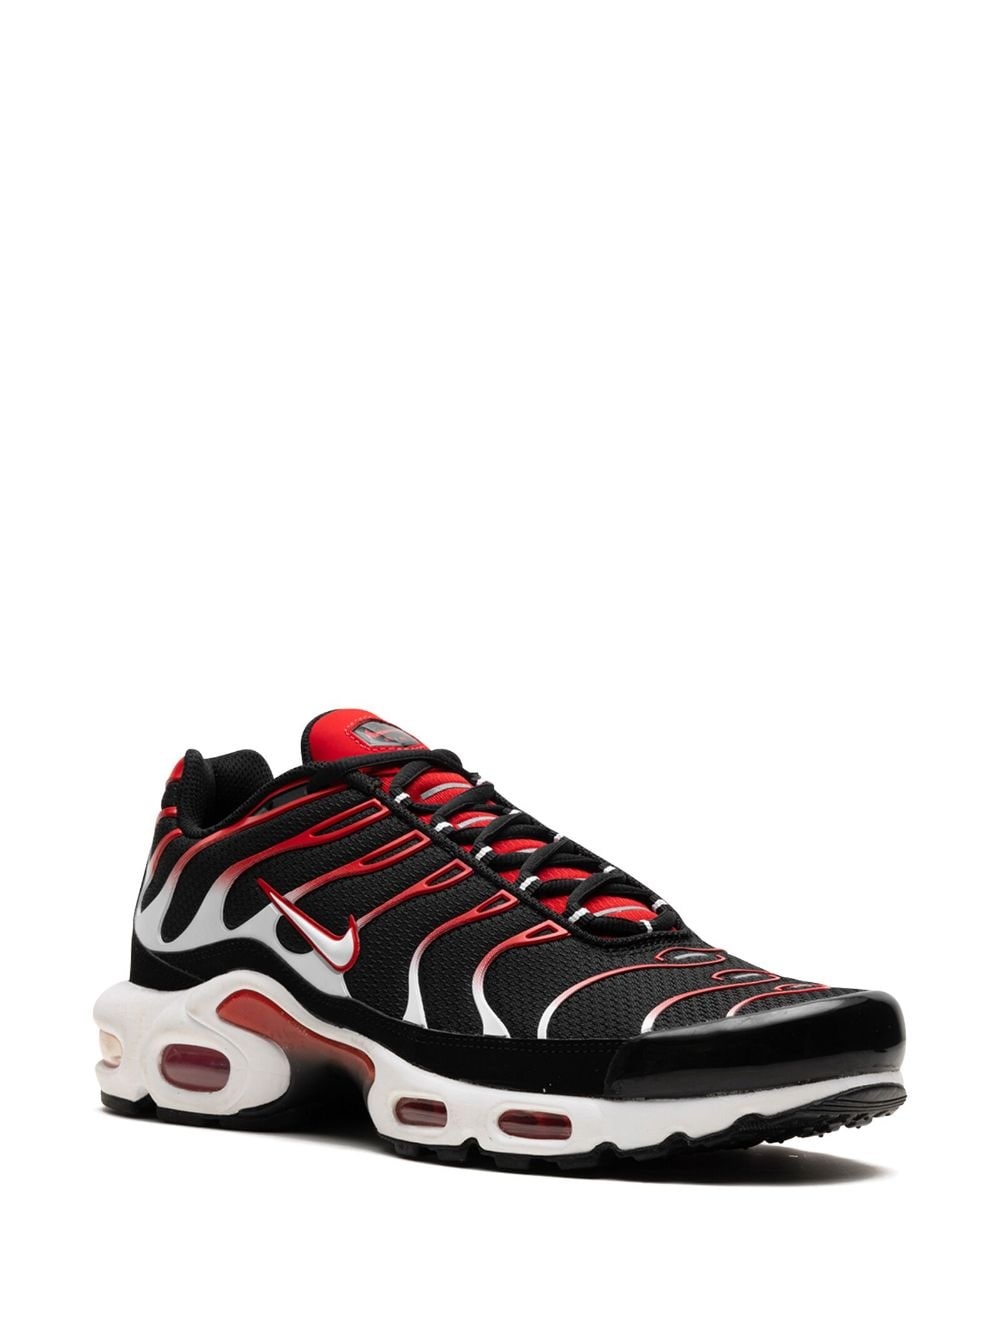 Air Max Plus "Black/White/University Red" sneakers - 2